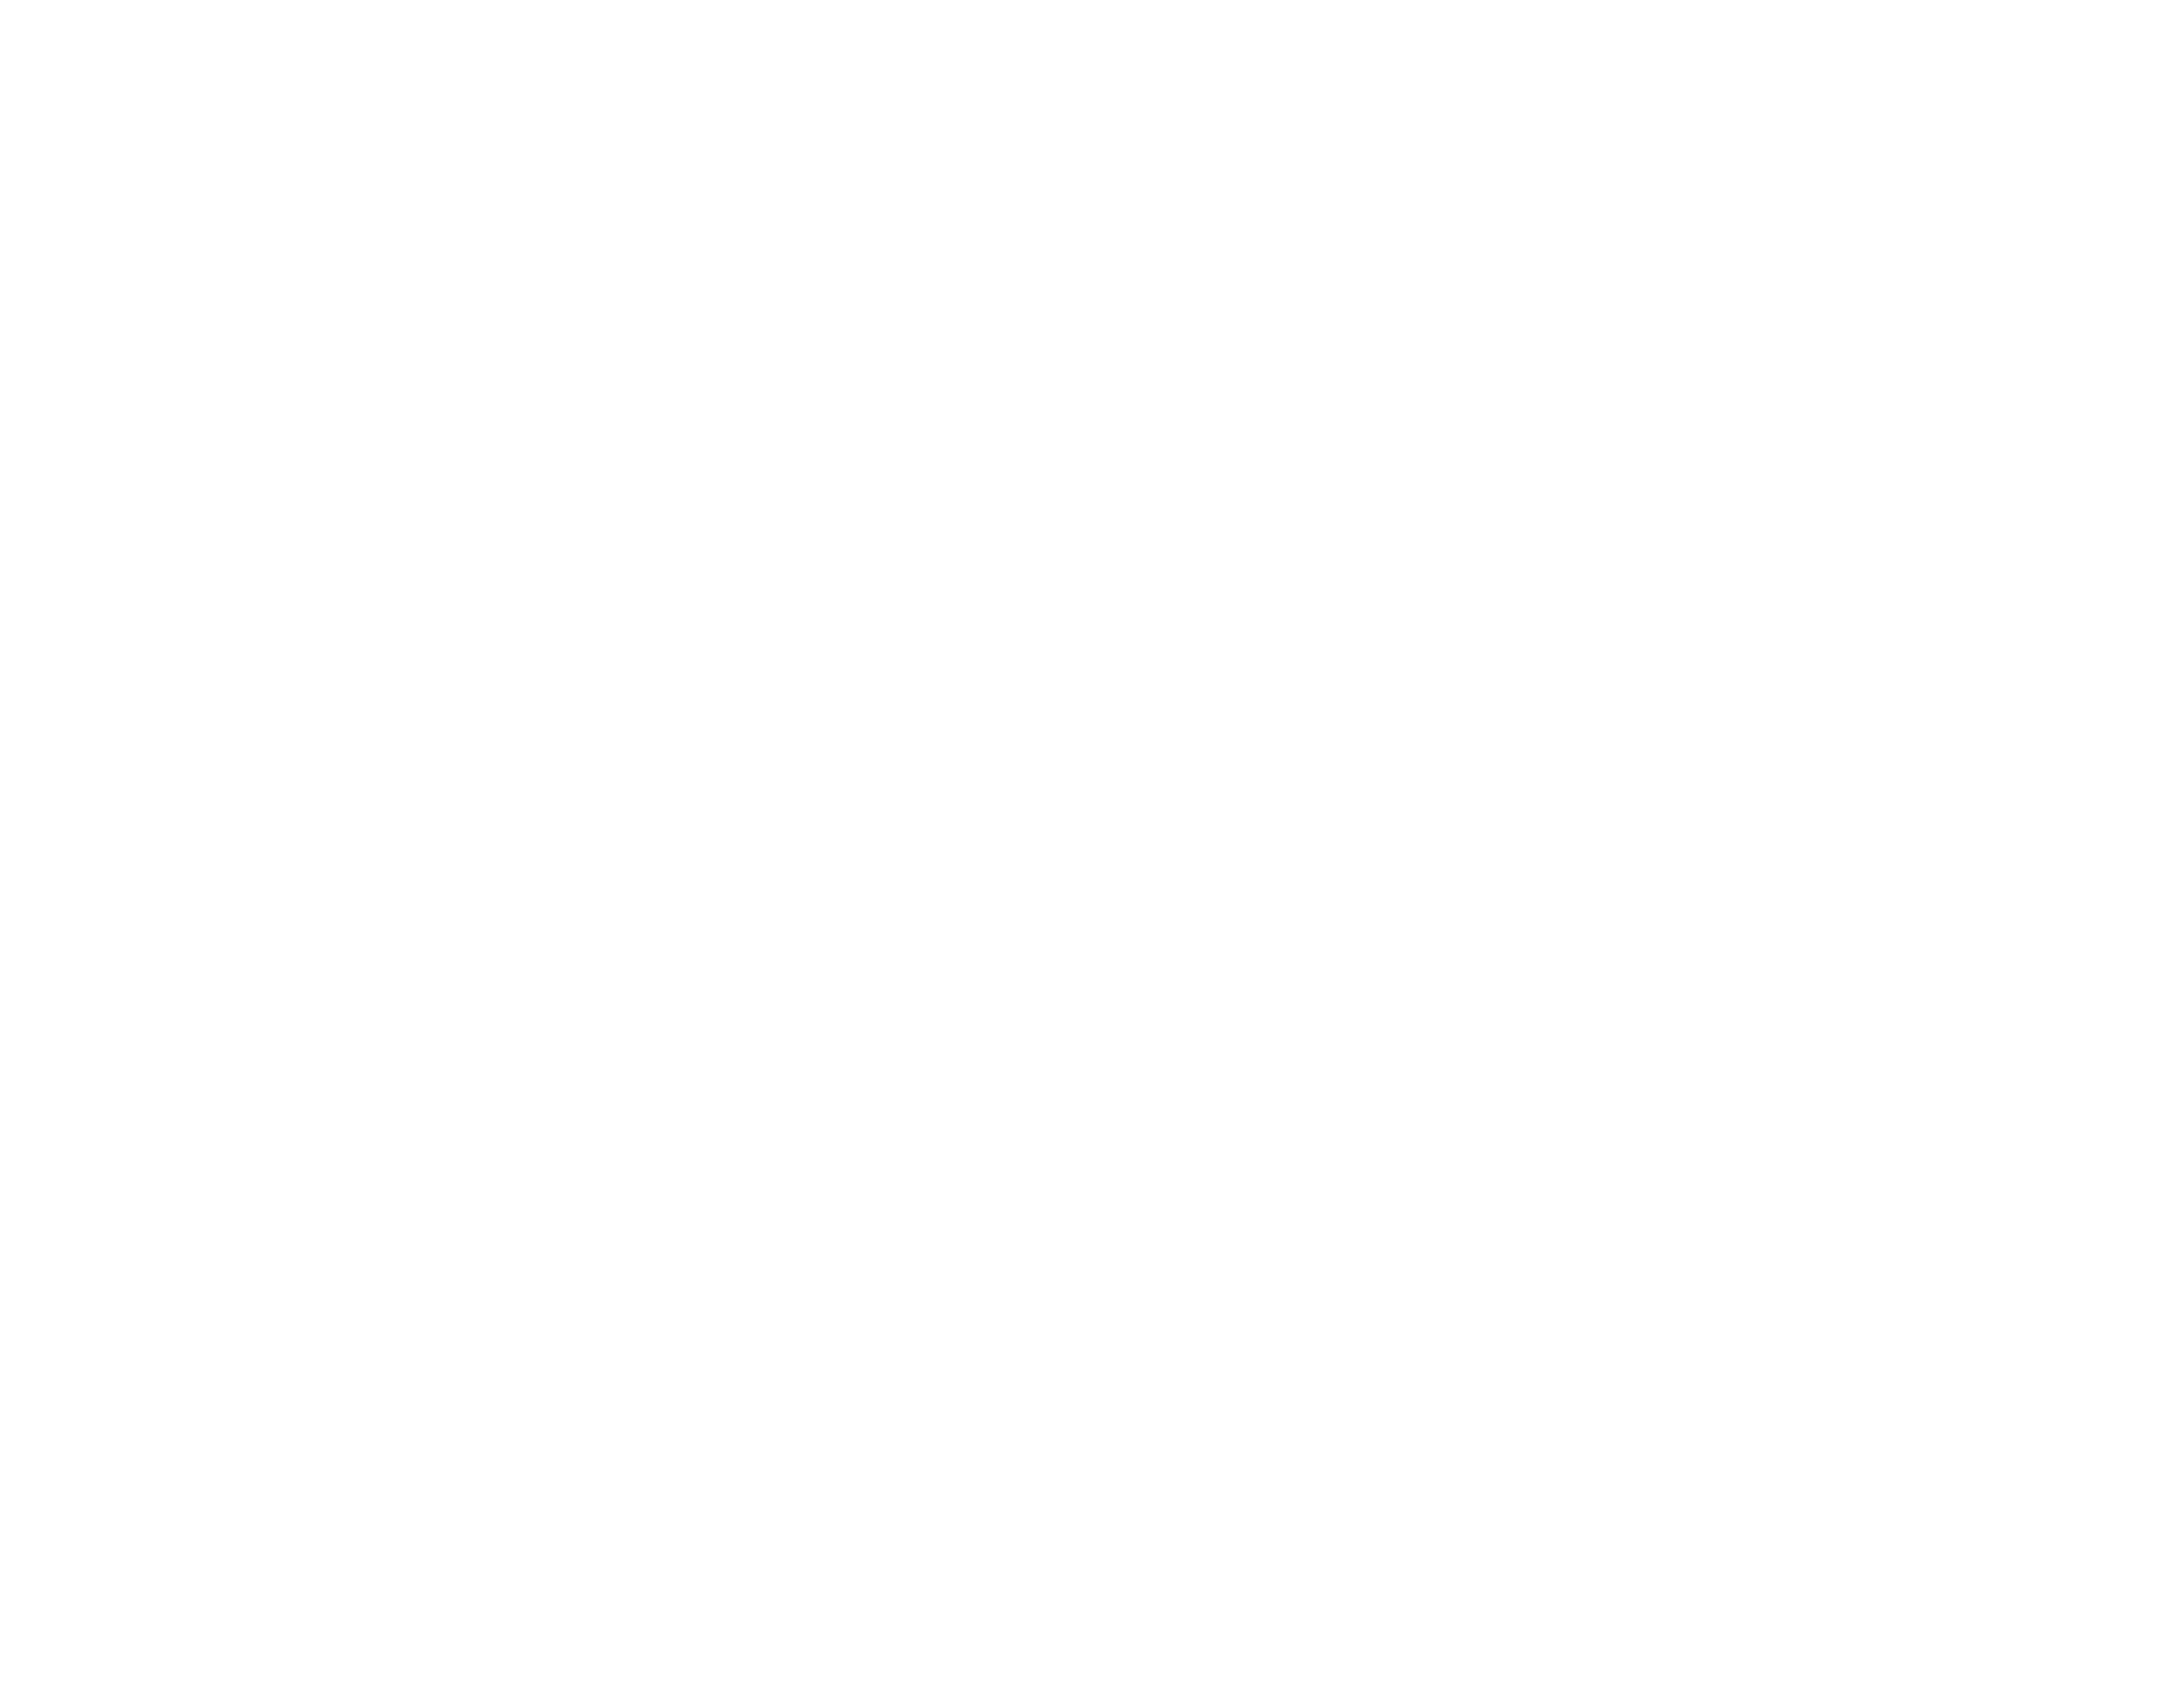 Grind ECU Best Non-European Documentary